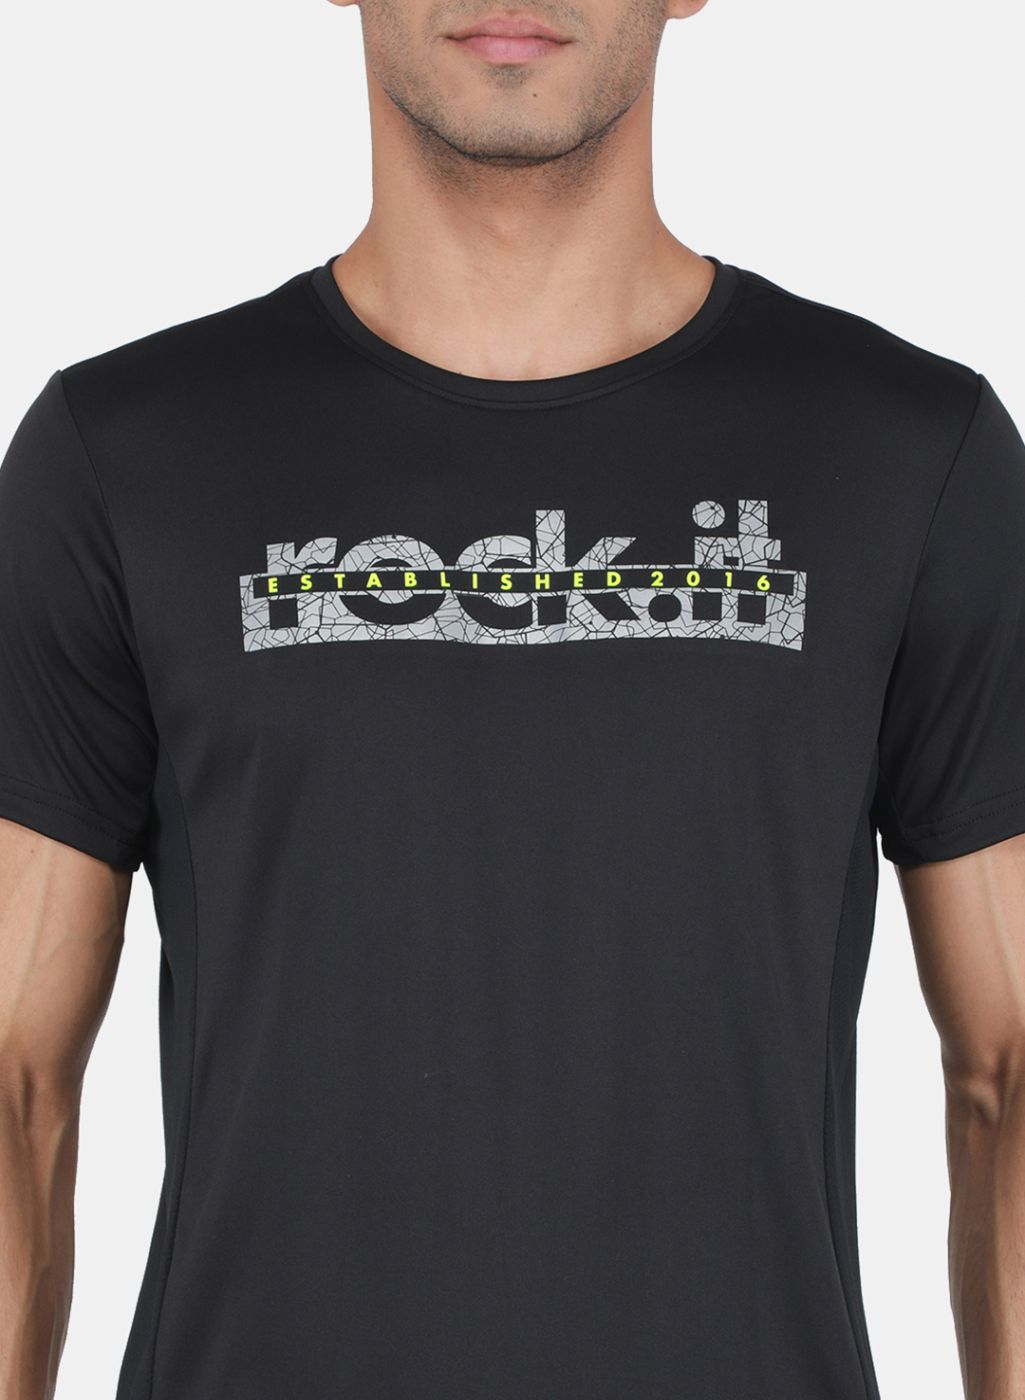 Rock-it Men Black Printed T-Shirt